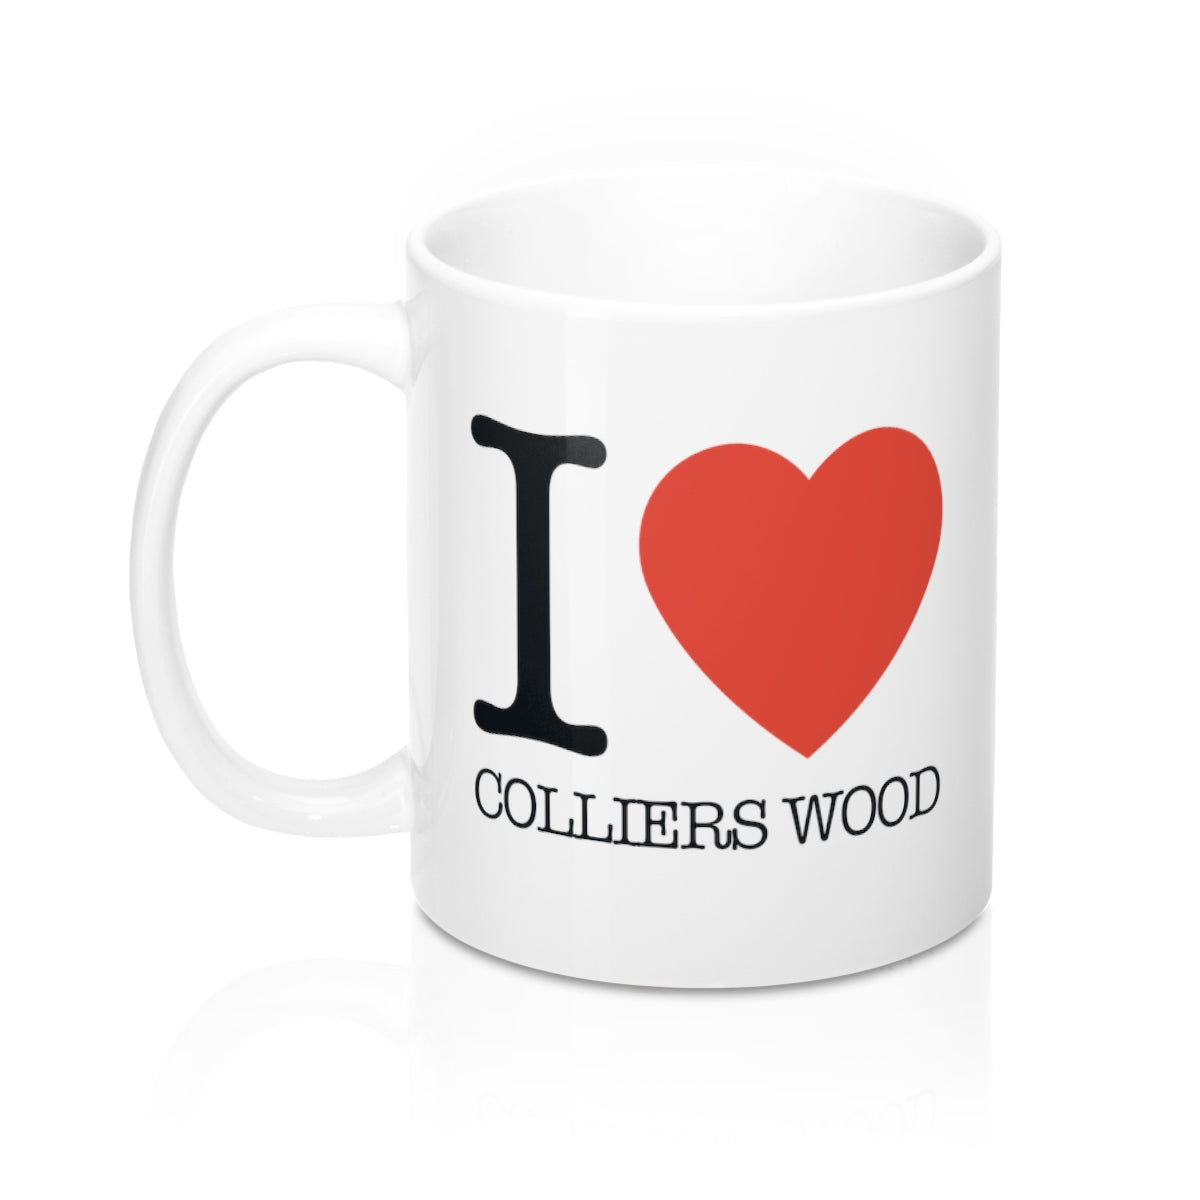 I Heart Colliers Wood Mug